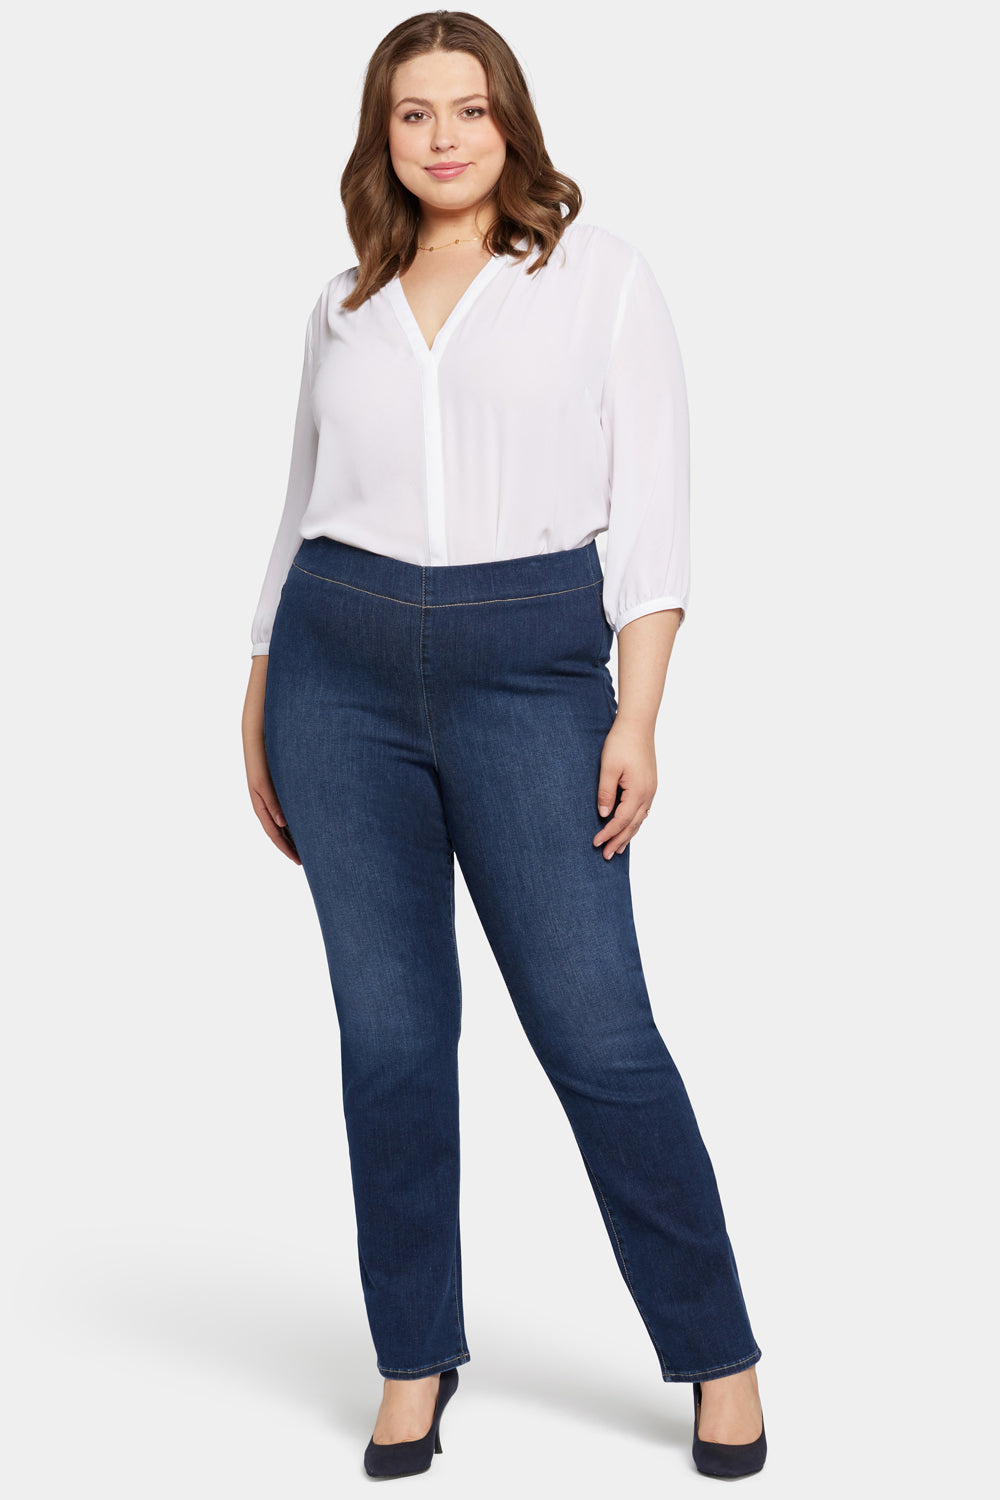 NYDJ Pull-On Straight Jeans In Plus Size  - Wonderland